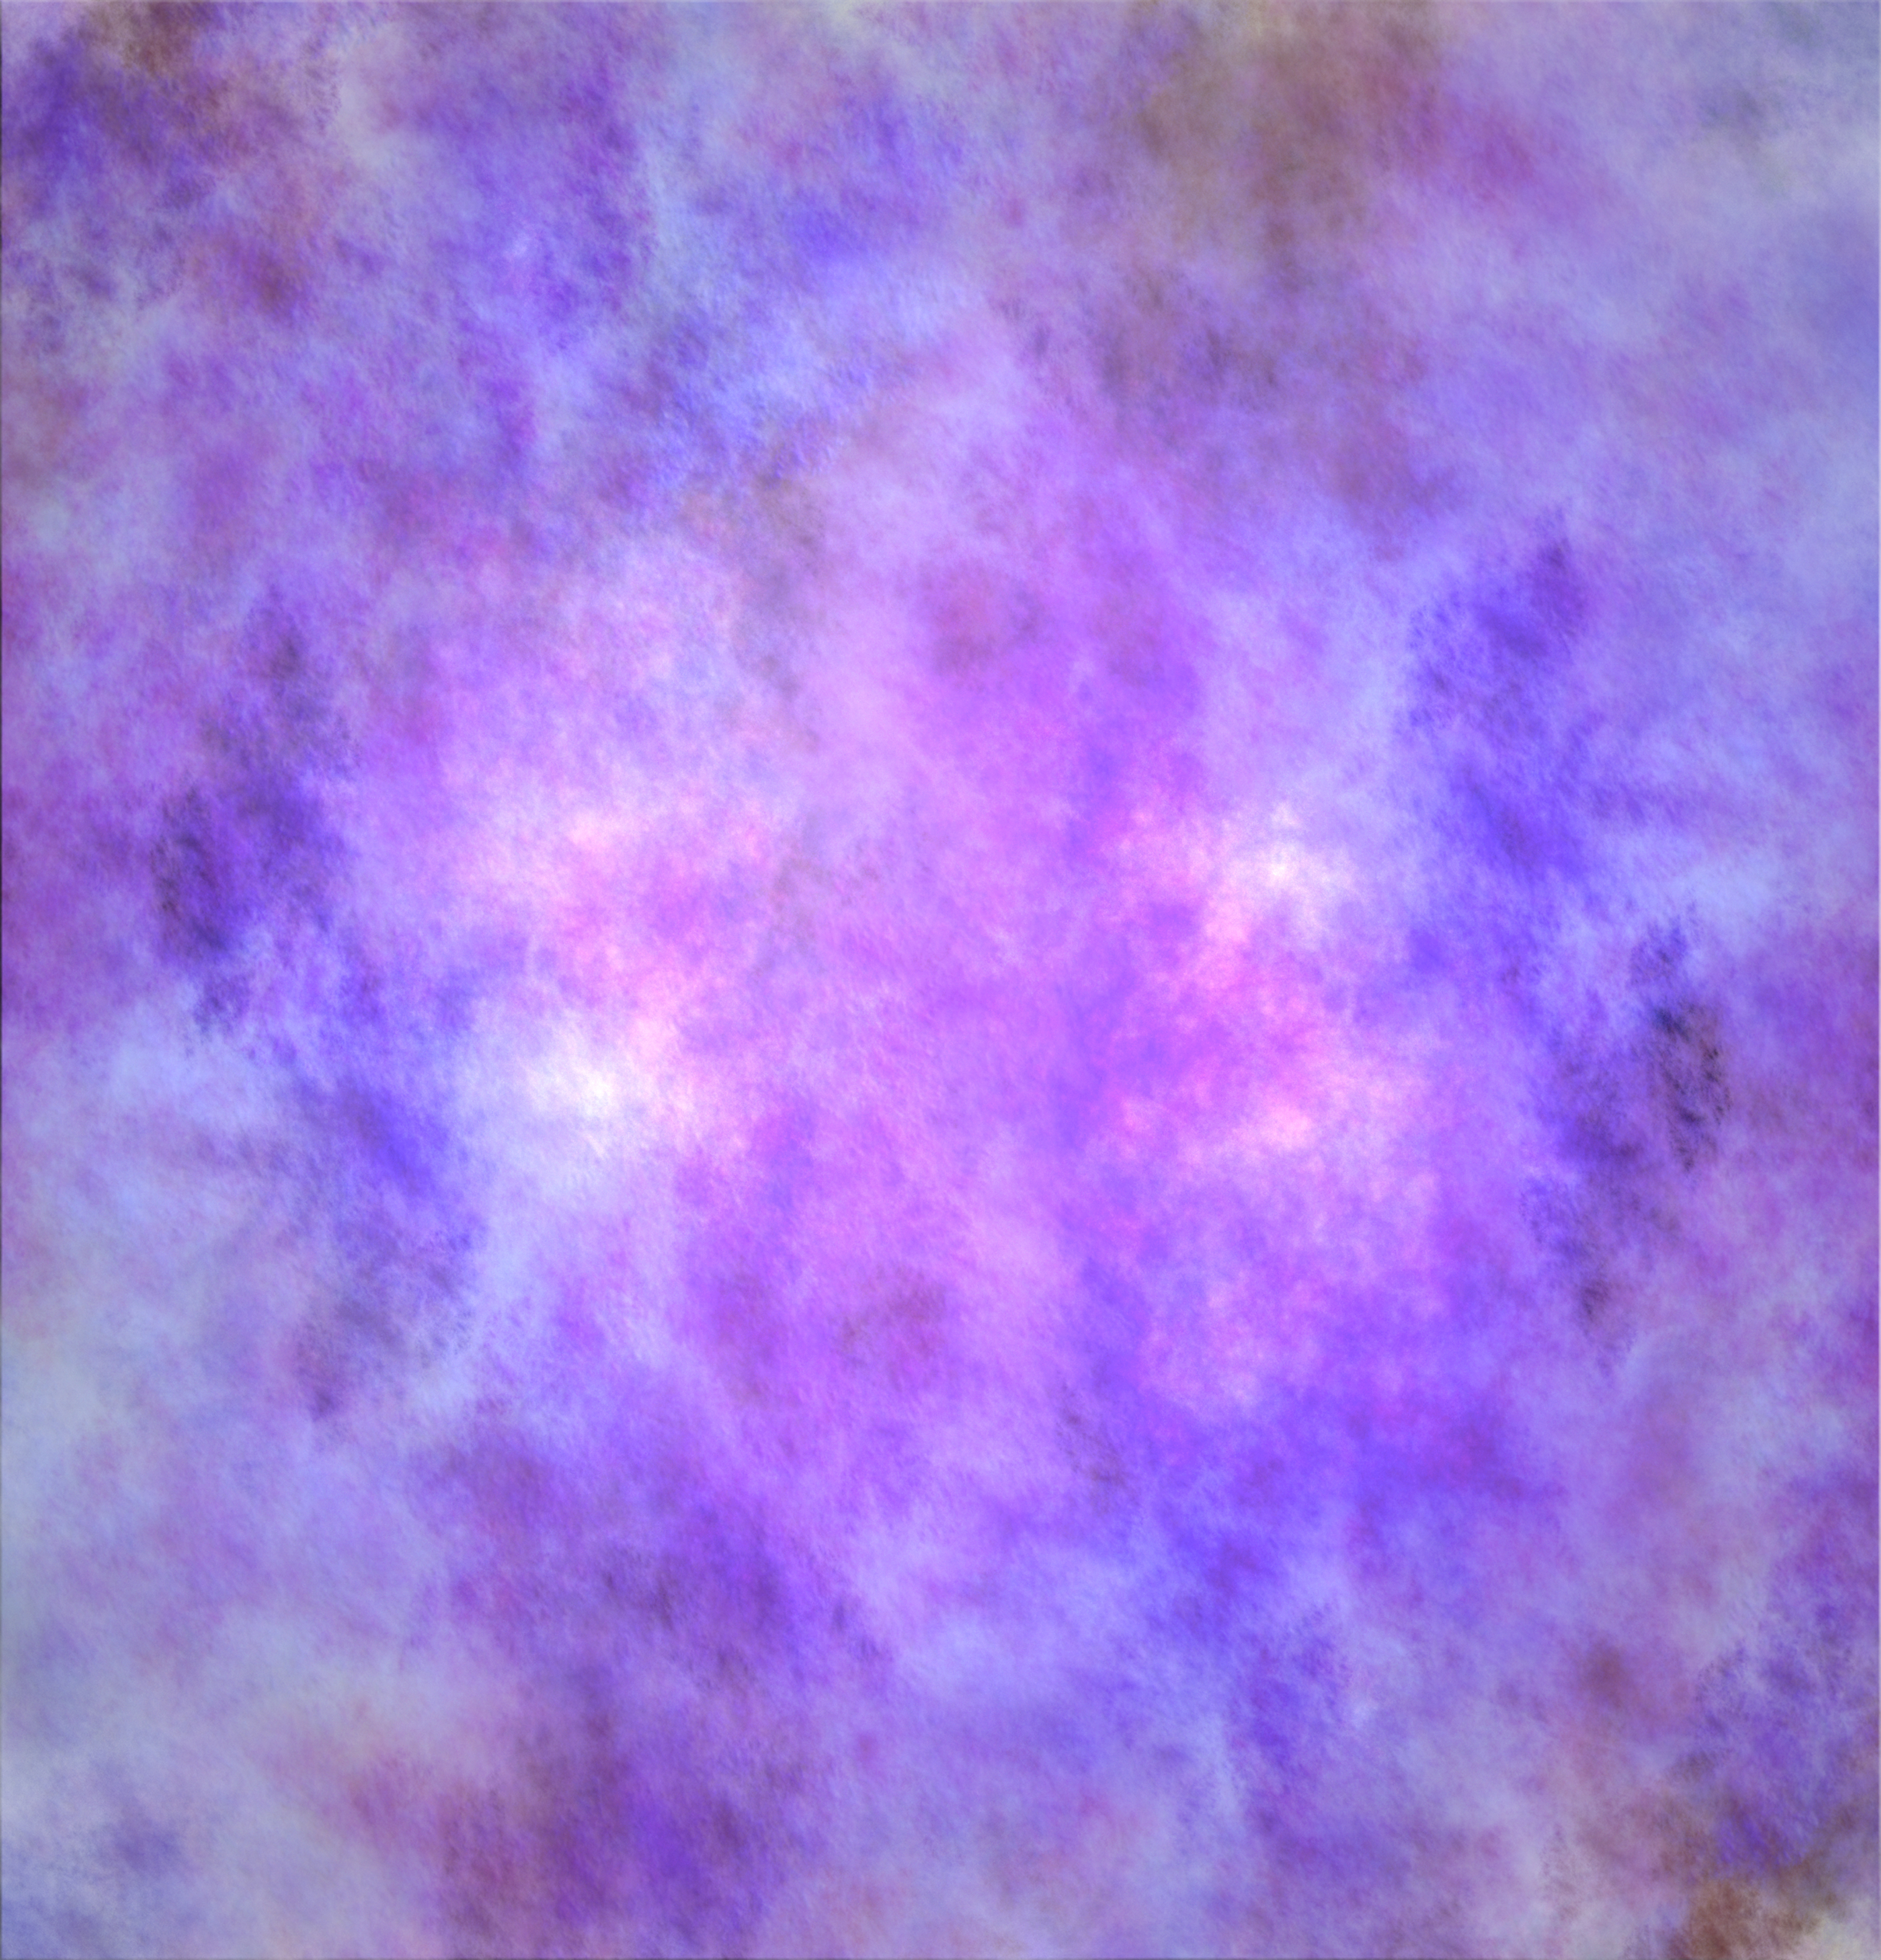 Purple Clouds by PaulineMoss on DeviantArt